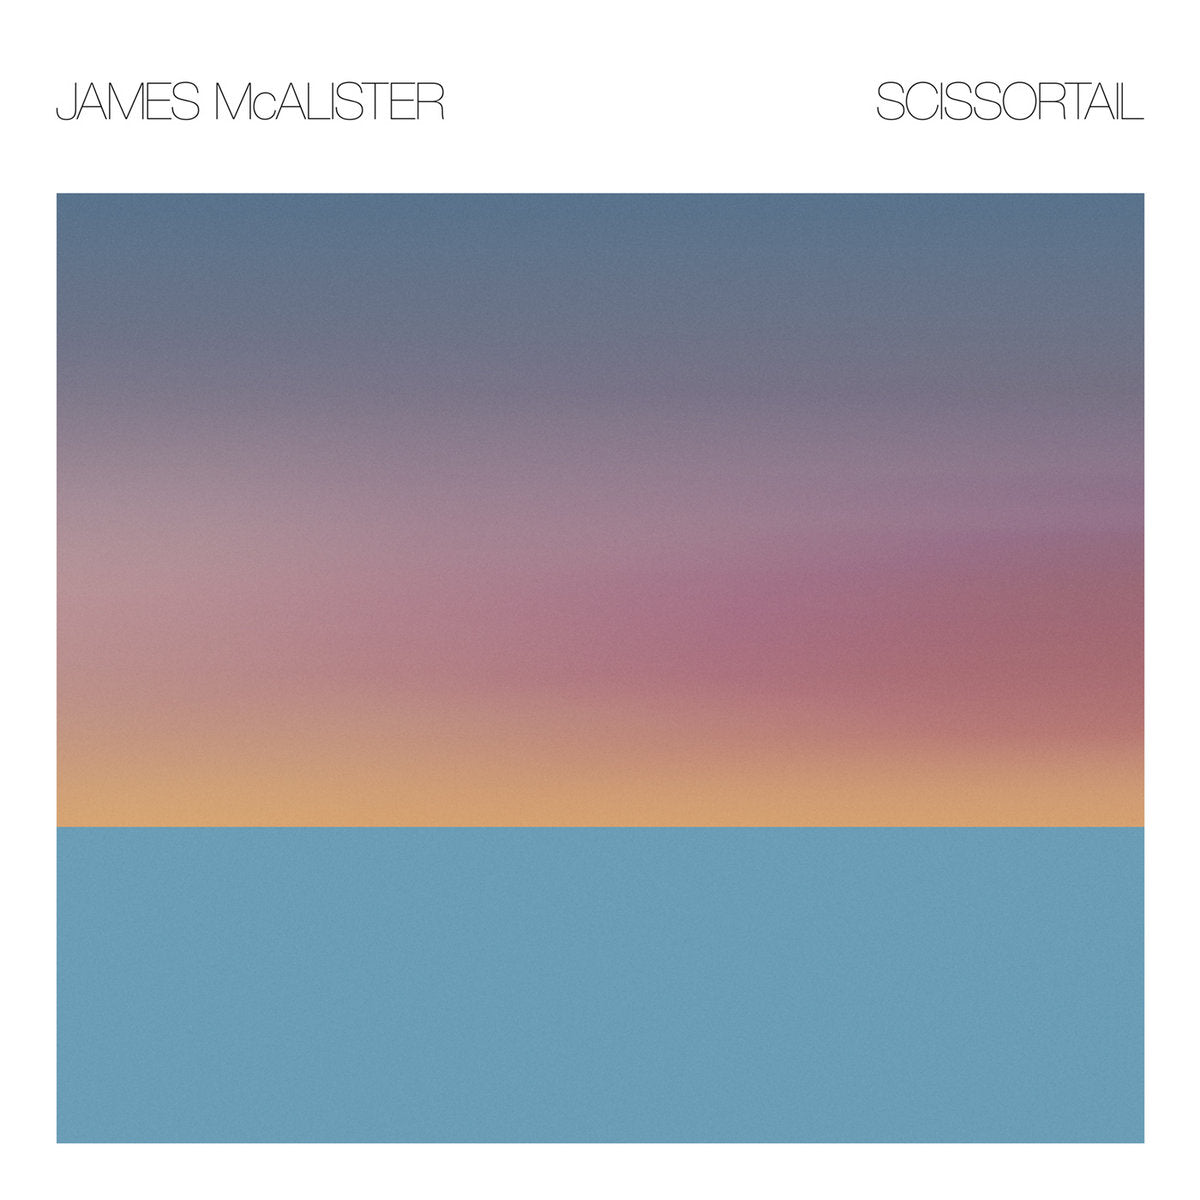 JAMES MCALISTER - Scissortail - LP - Vinyl